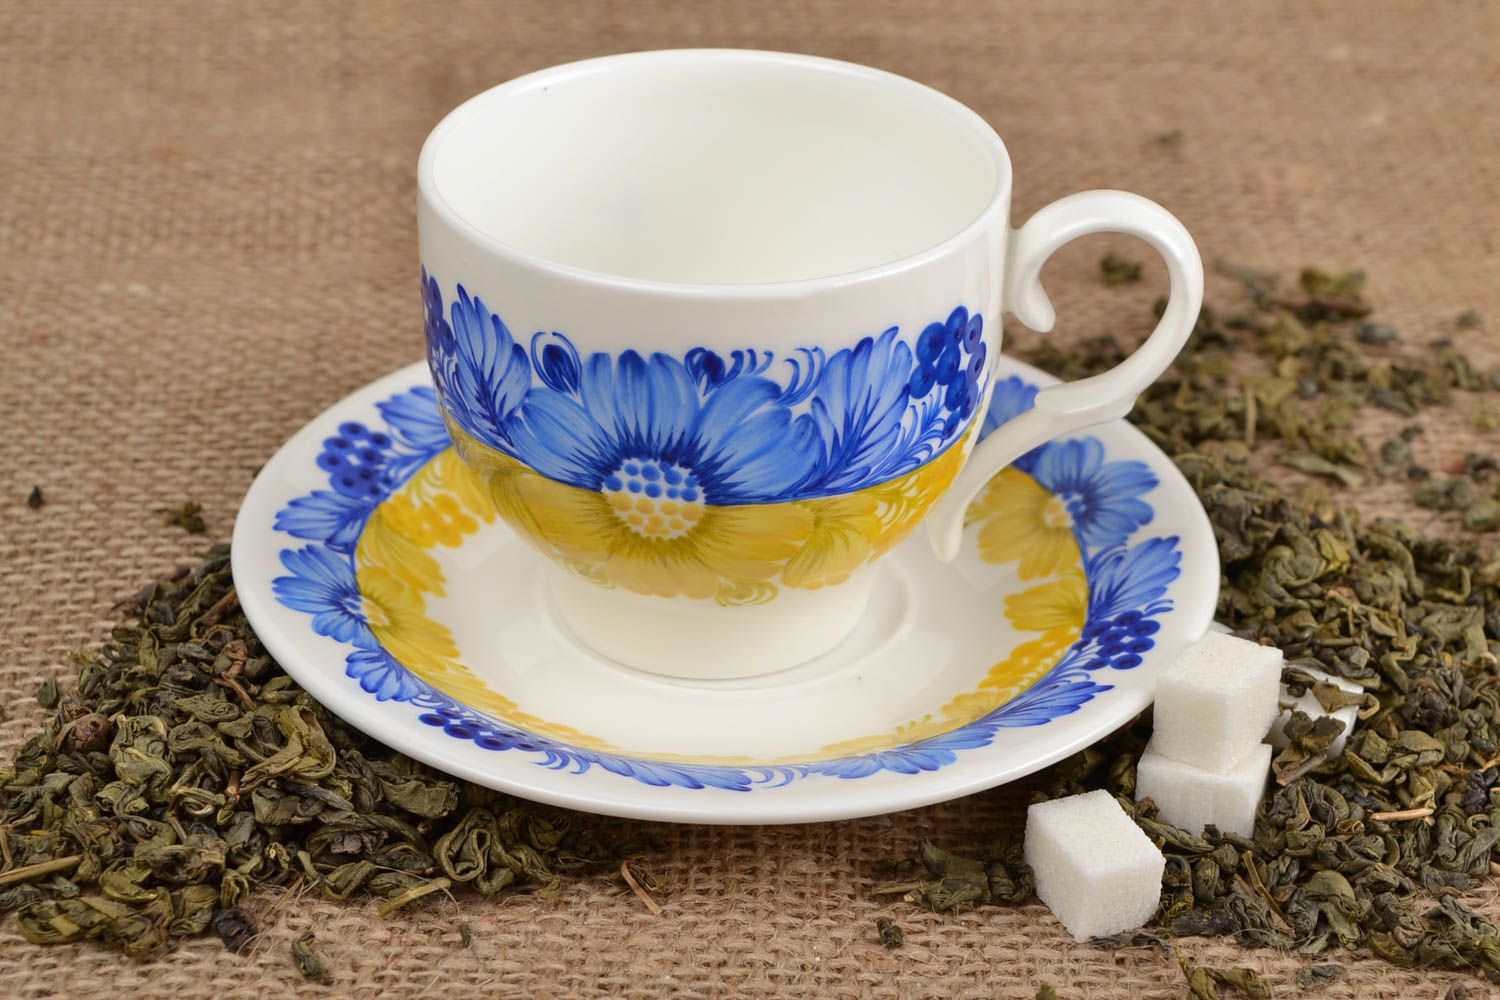 Elegant porcelain teacup in Ukrainian flag colors - yellow and blue photo 1